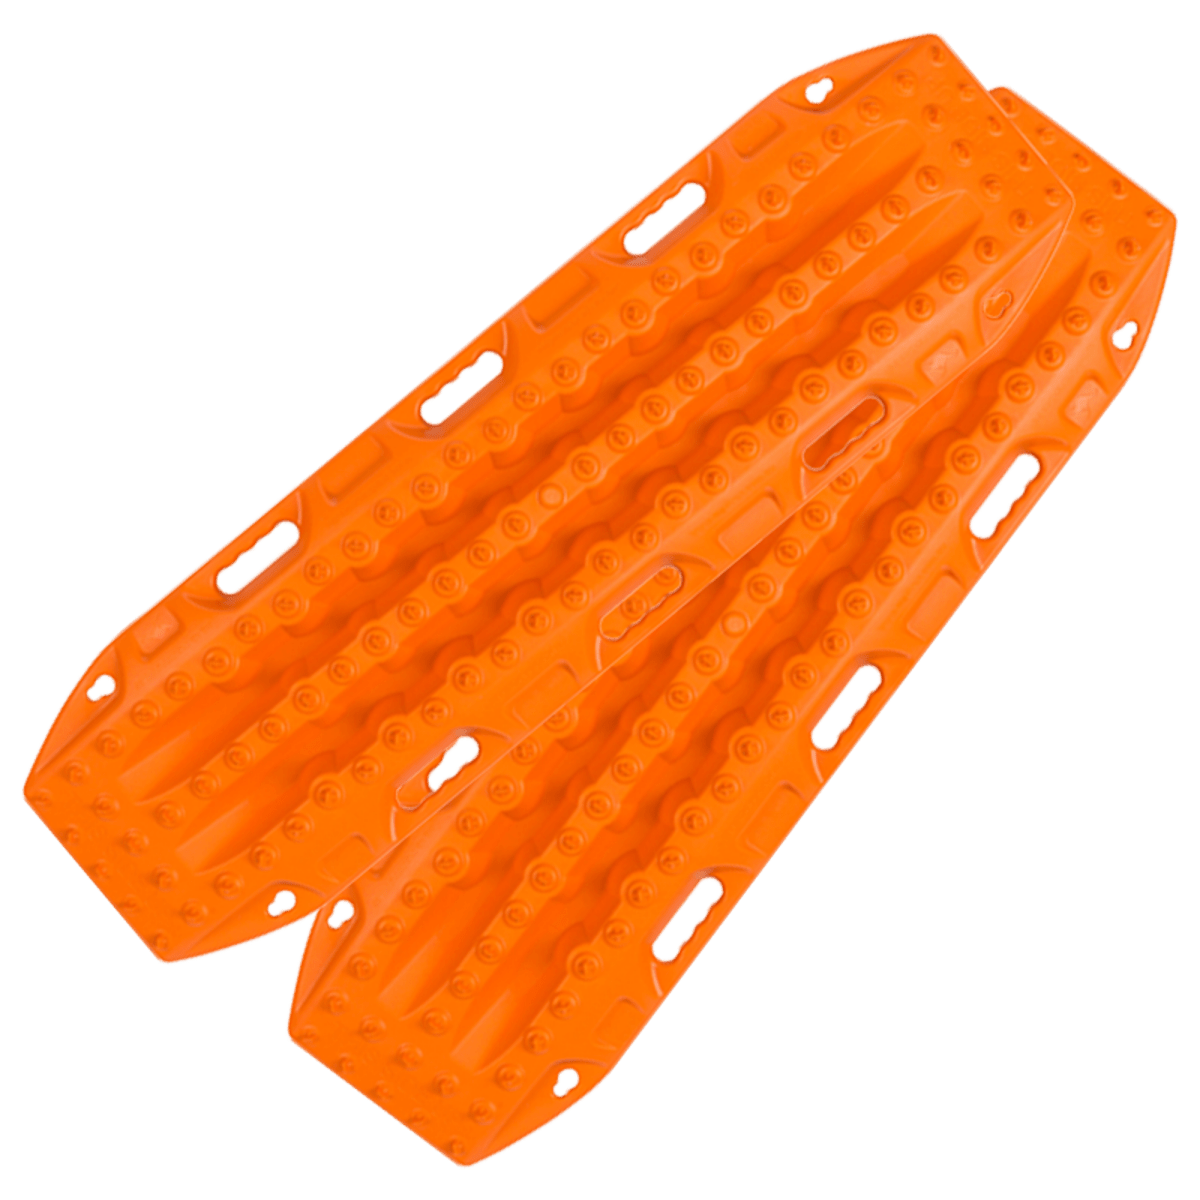 MAXTRAX MKII Signature Orange Recovery Boards - Overland Bound